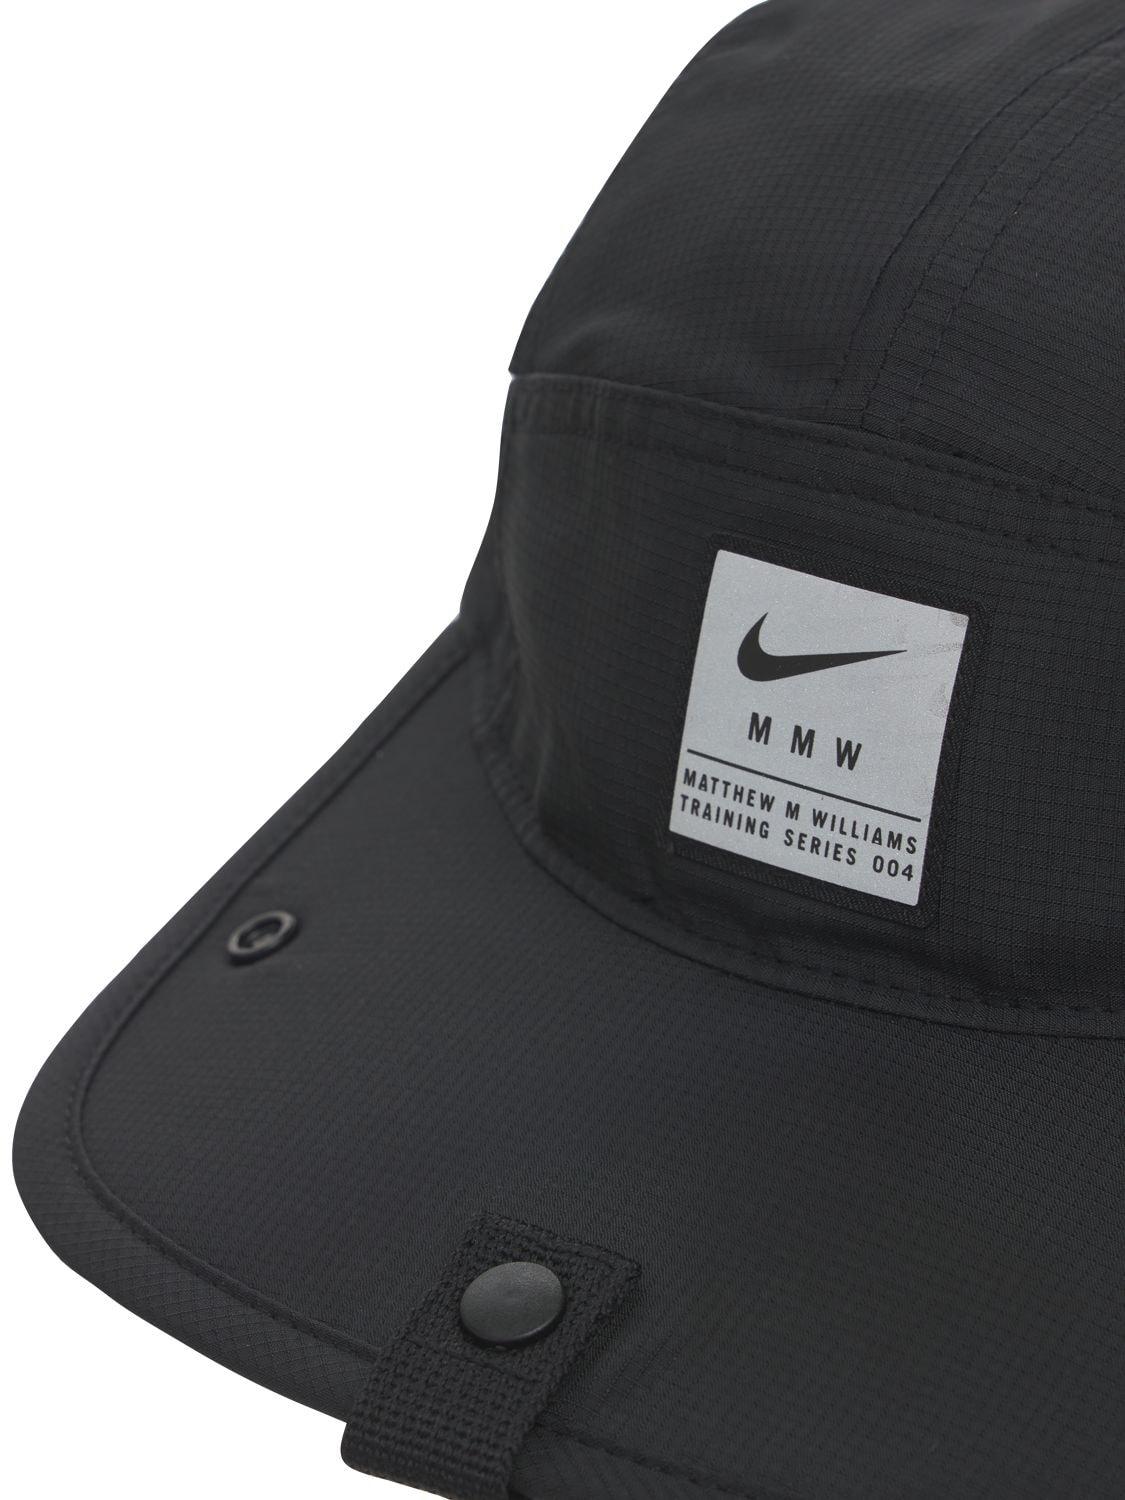 Nike Mmw Hat in Black | Lyst